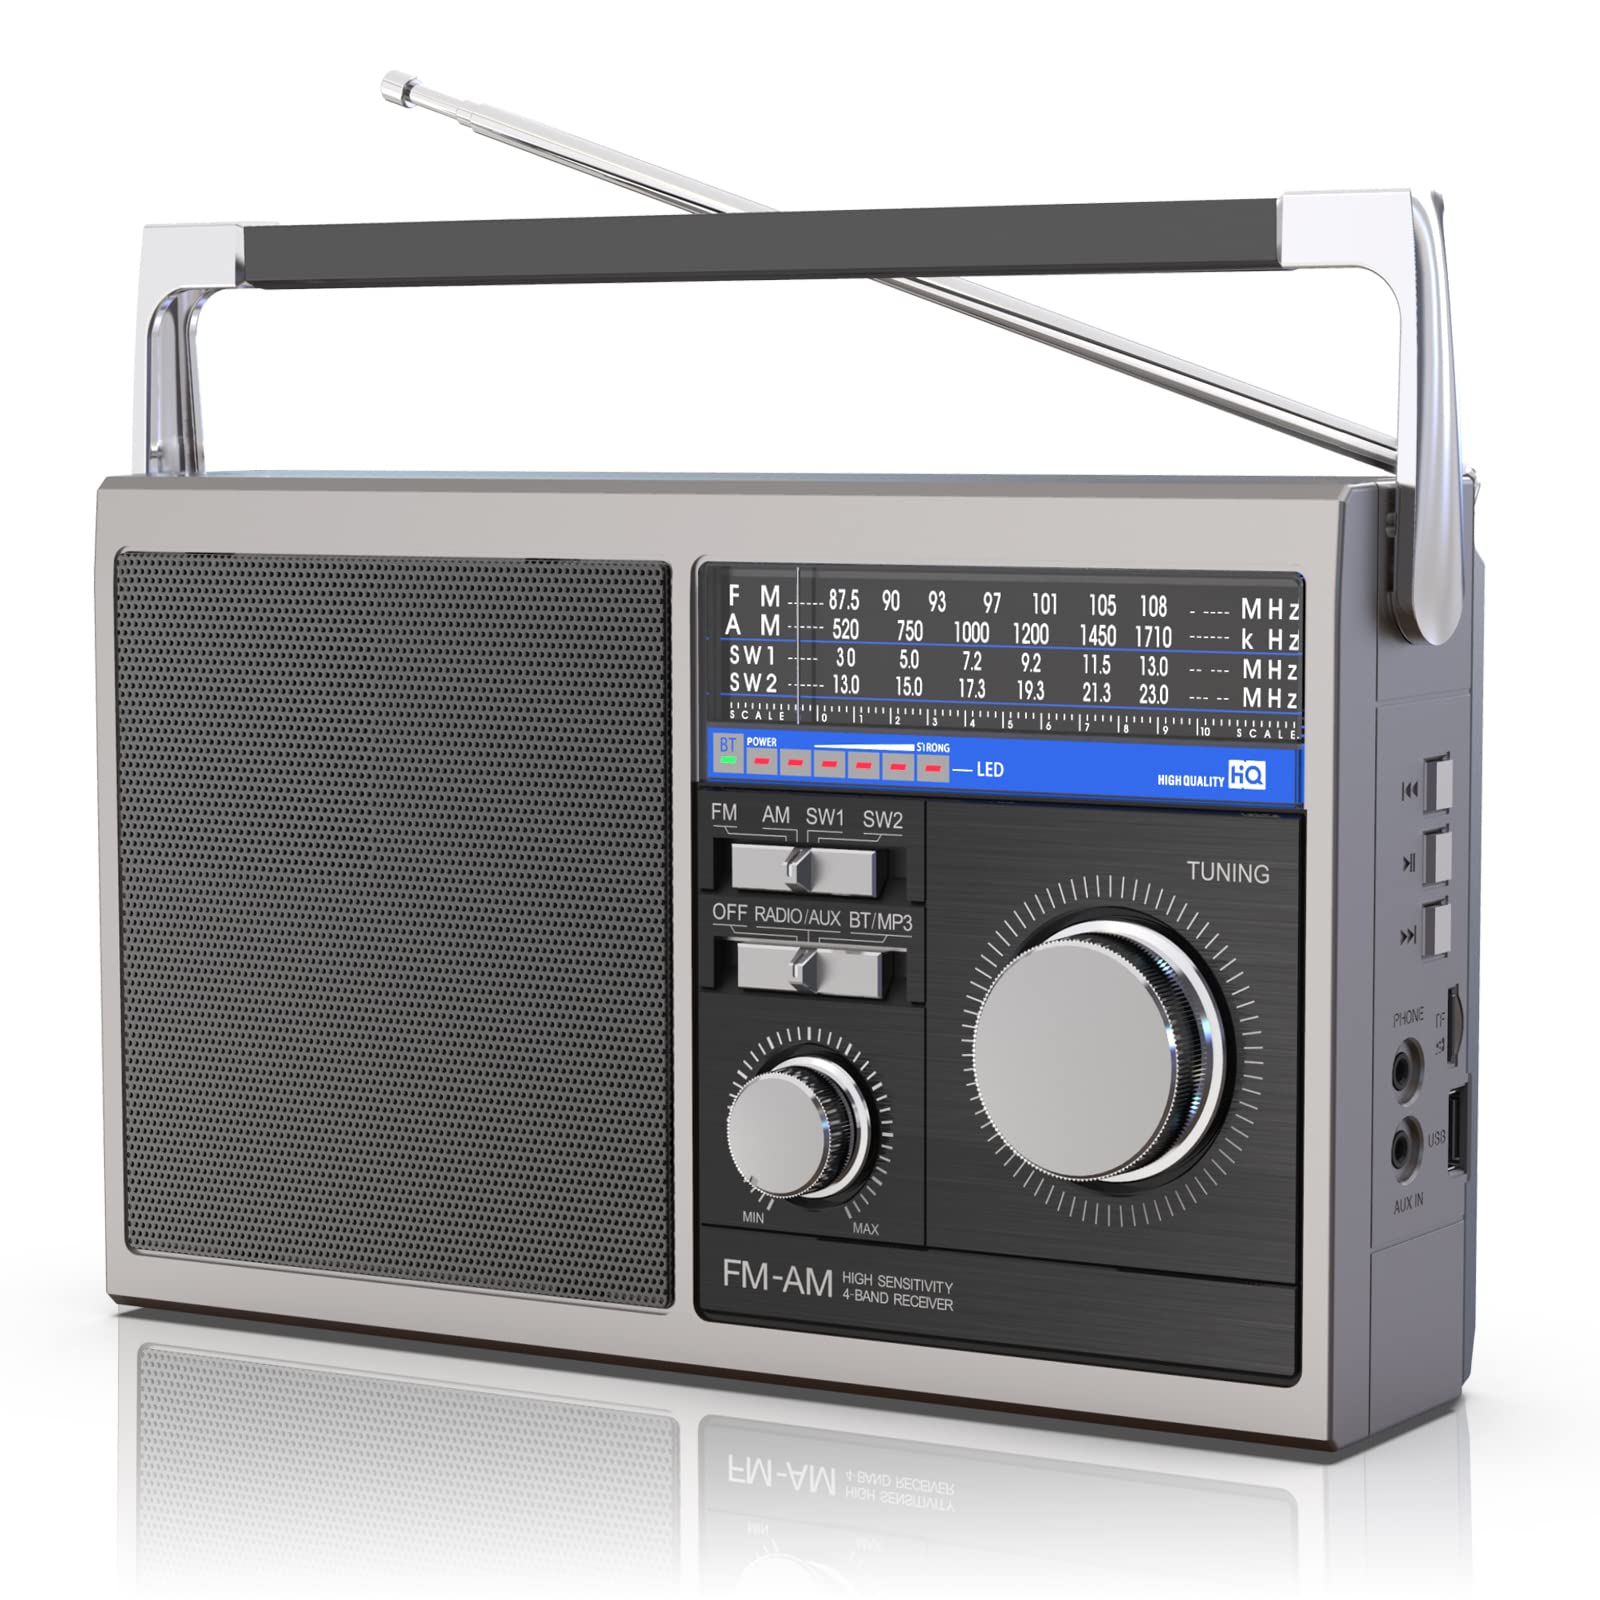 Yewrich Portable AM FM Radio, Shortwave Transistor Radio with Best Reception, Battery Operated or AC Power Retro Radio with Big Bluetoot